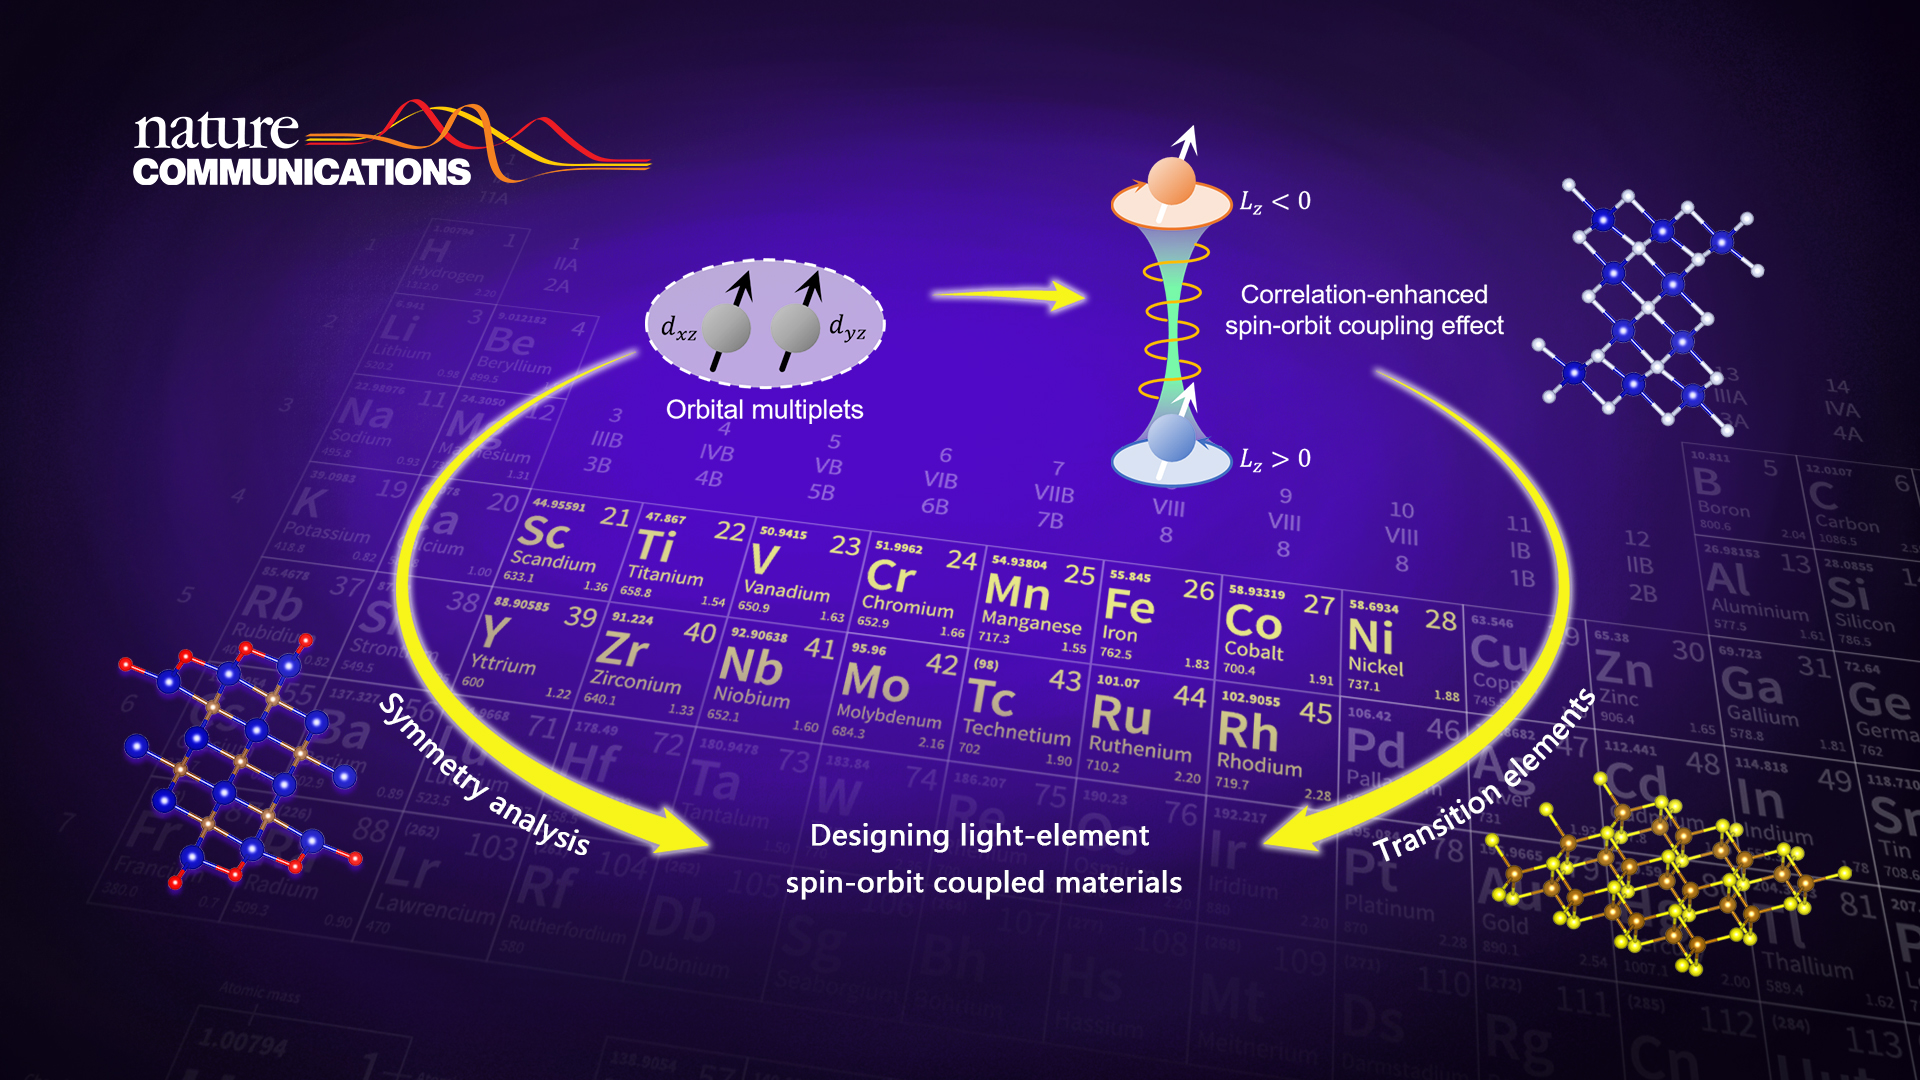 Researchers make progress on designing light-element spin-orbit coupled materials